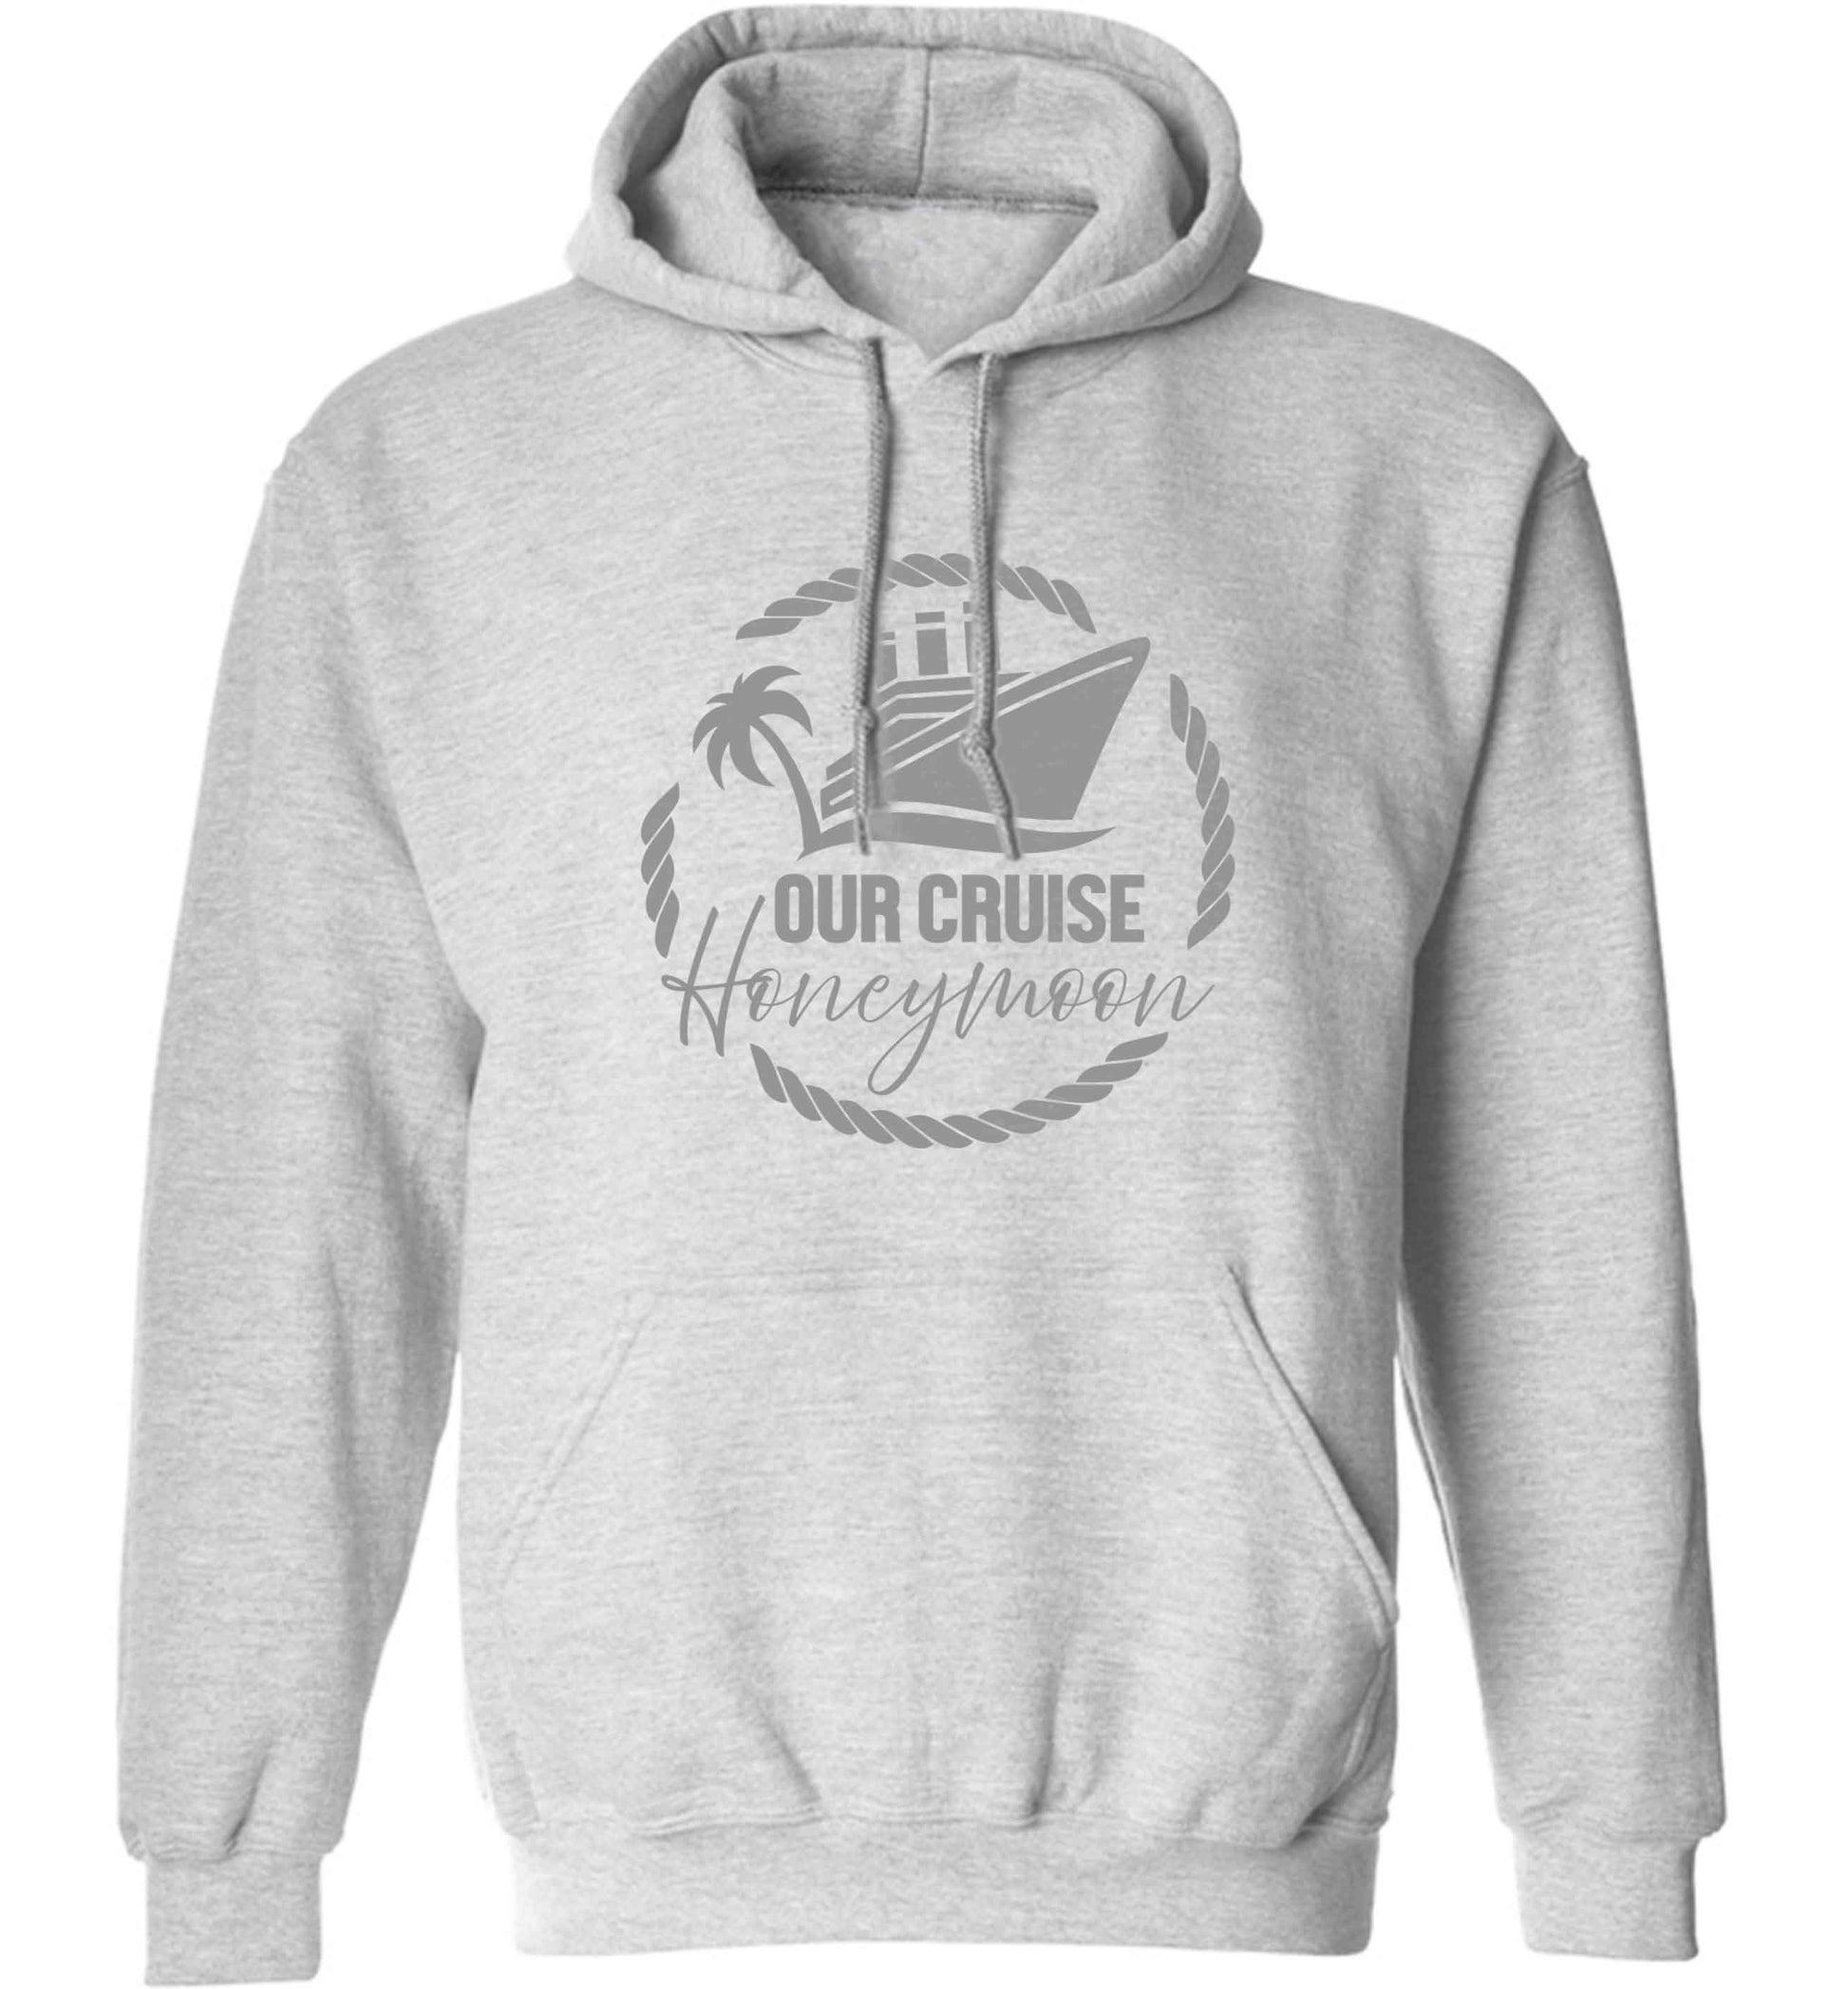 Our cruise honeymoon adults unisex grey hoodie 2XL